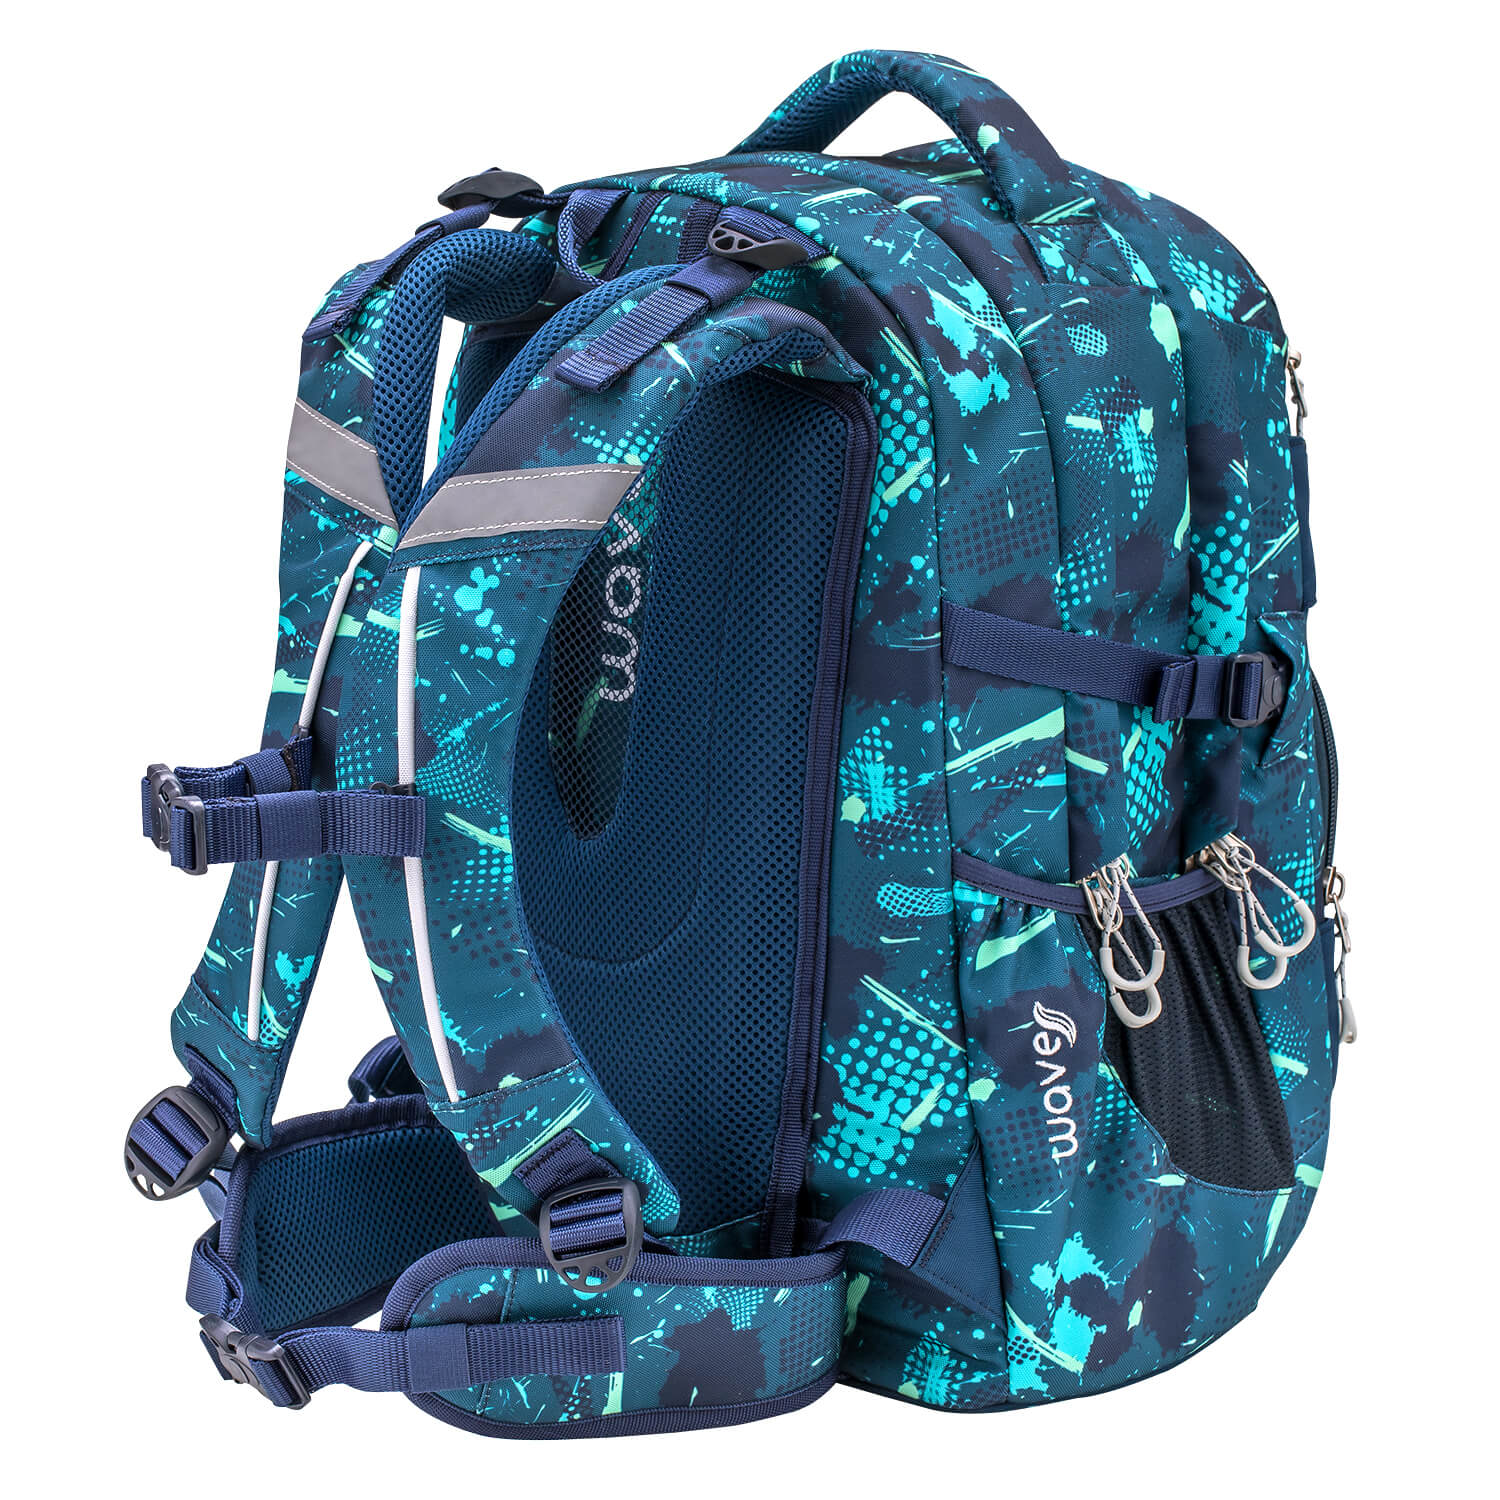 Wave Infinity Fantasy school backpack Set 2 Pcs